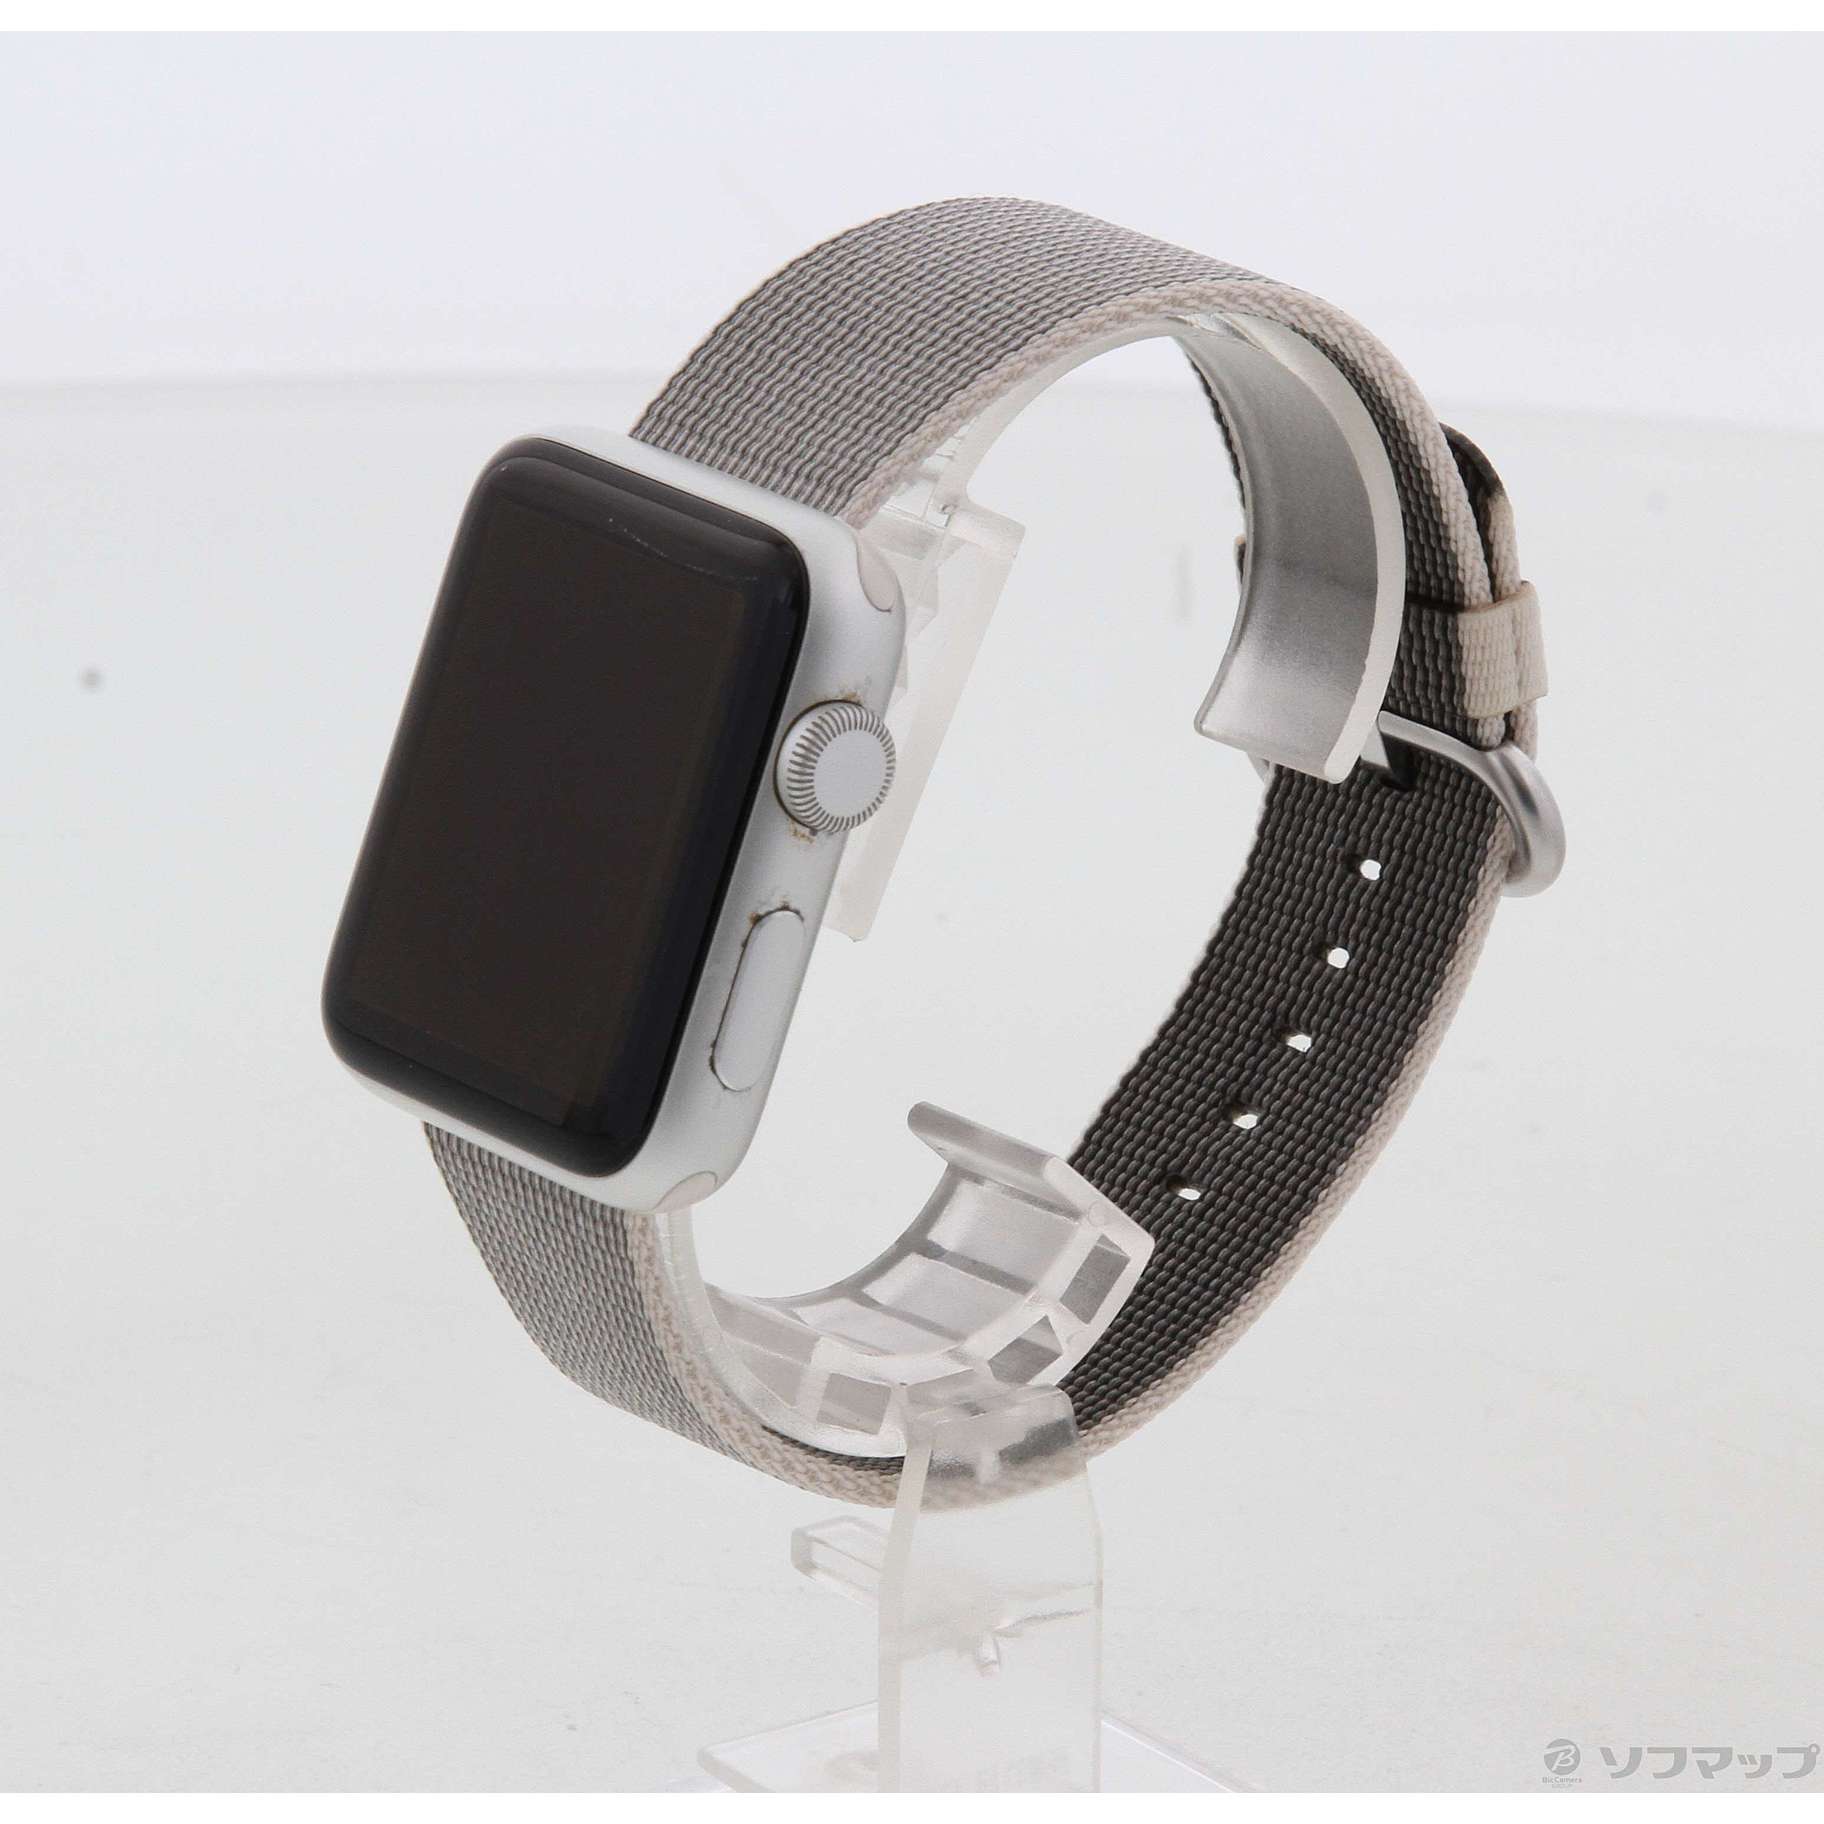 Apple Watch series 2 シルバーアルミニウムケース42mm www